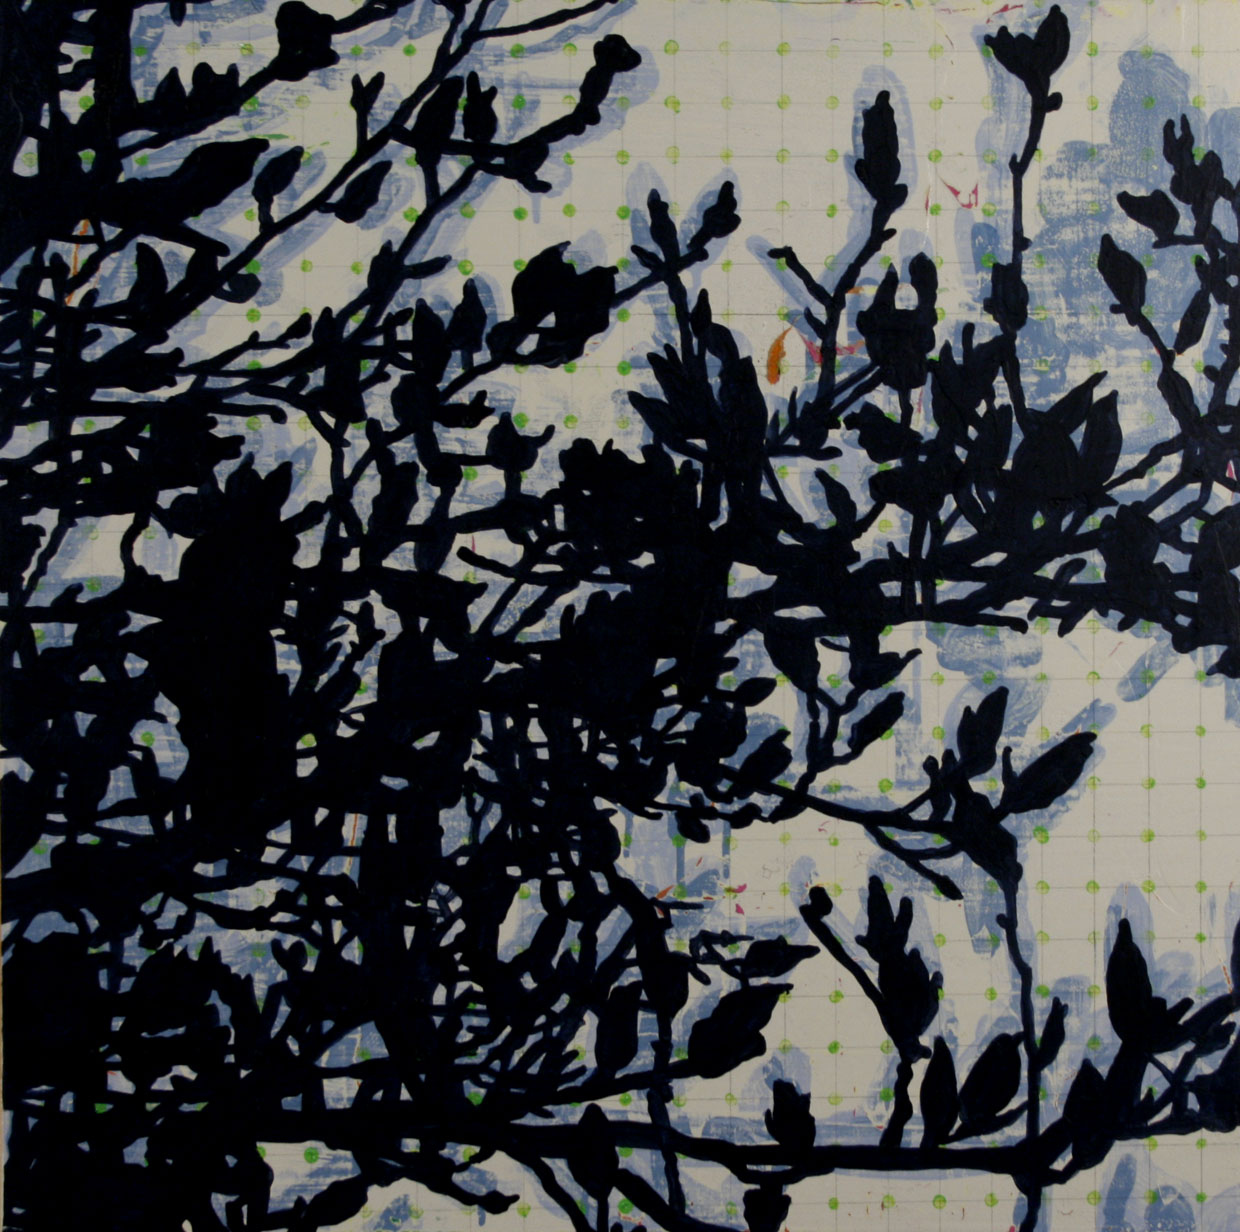 June Tree, 2014, 24" x 24"